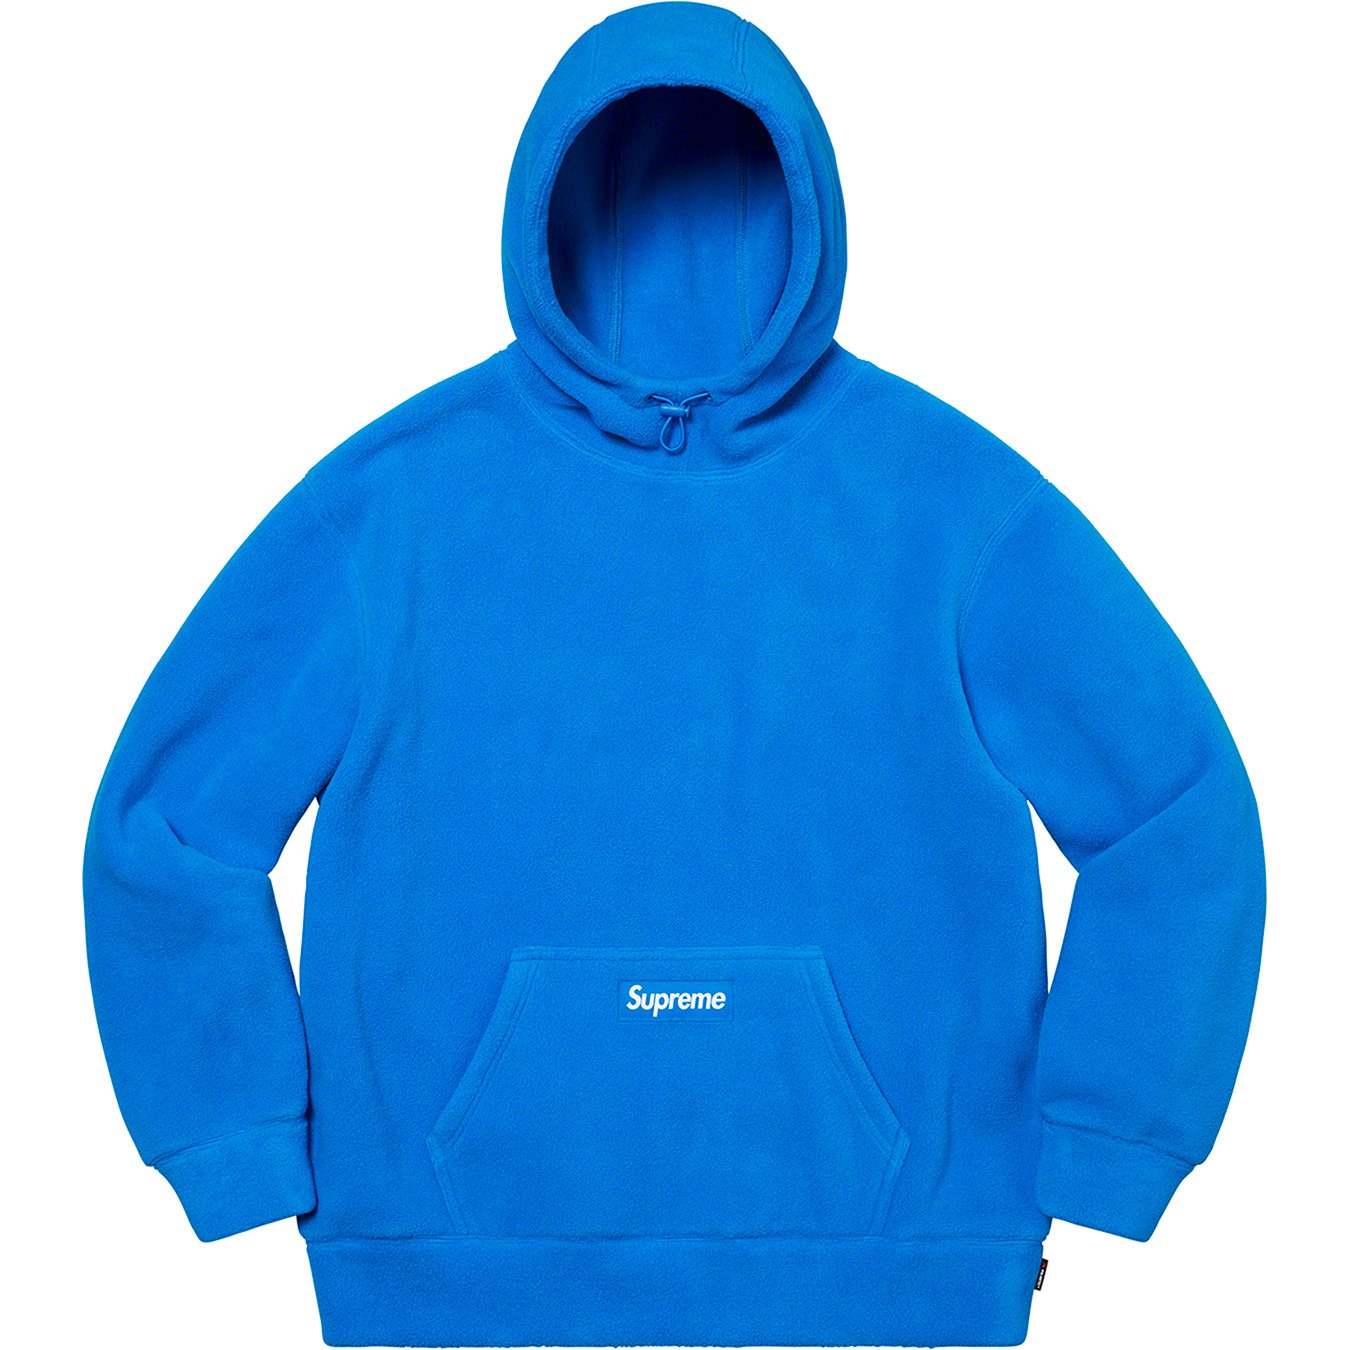 Polartec Hooded Sweatshirt - fall winter 2020 - Supreme